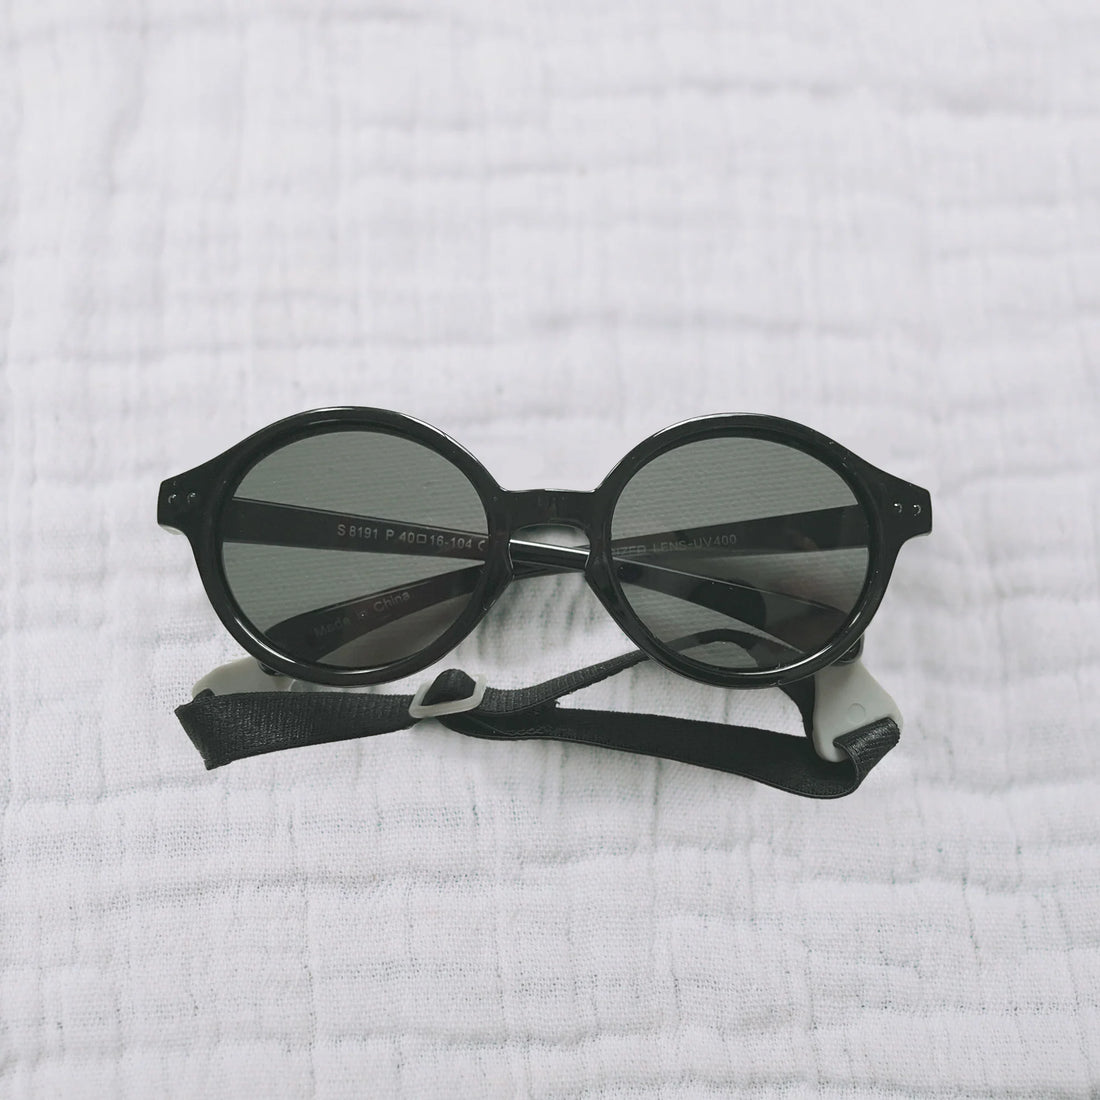 Honeysuckle Swim Co - Sunglasses (Round Black) 6-36M